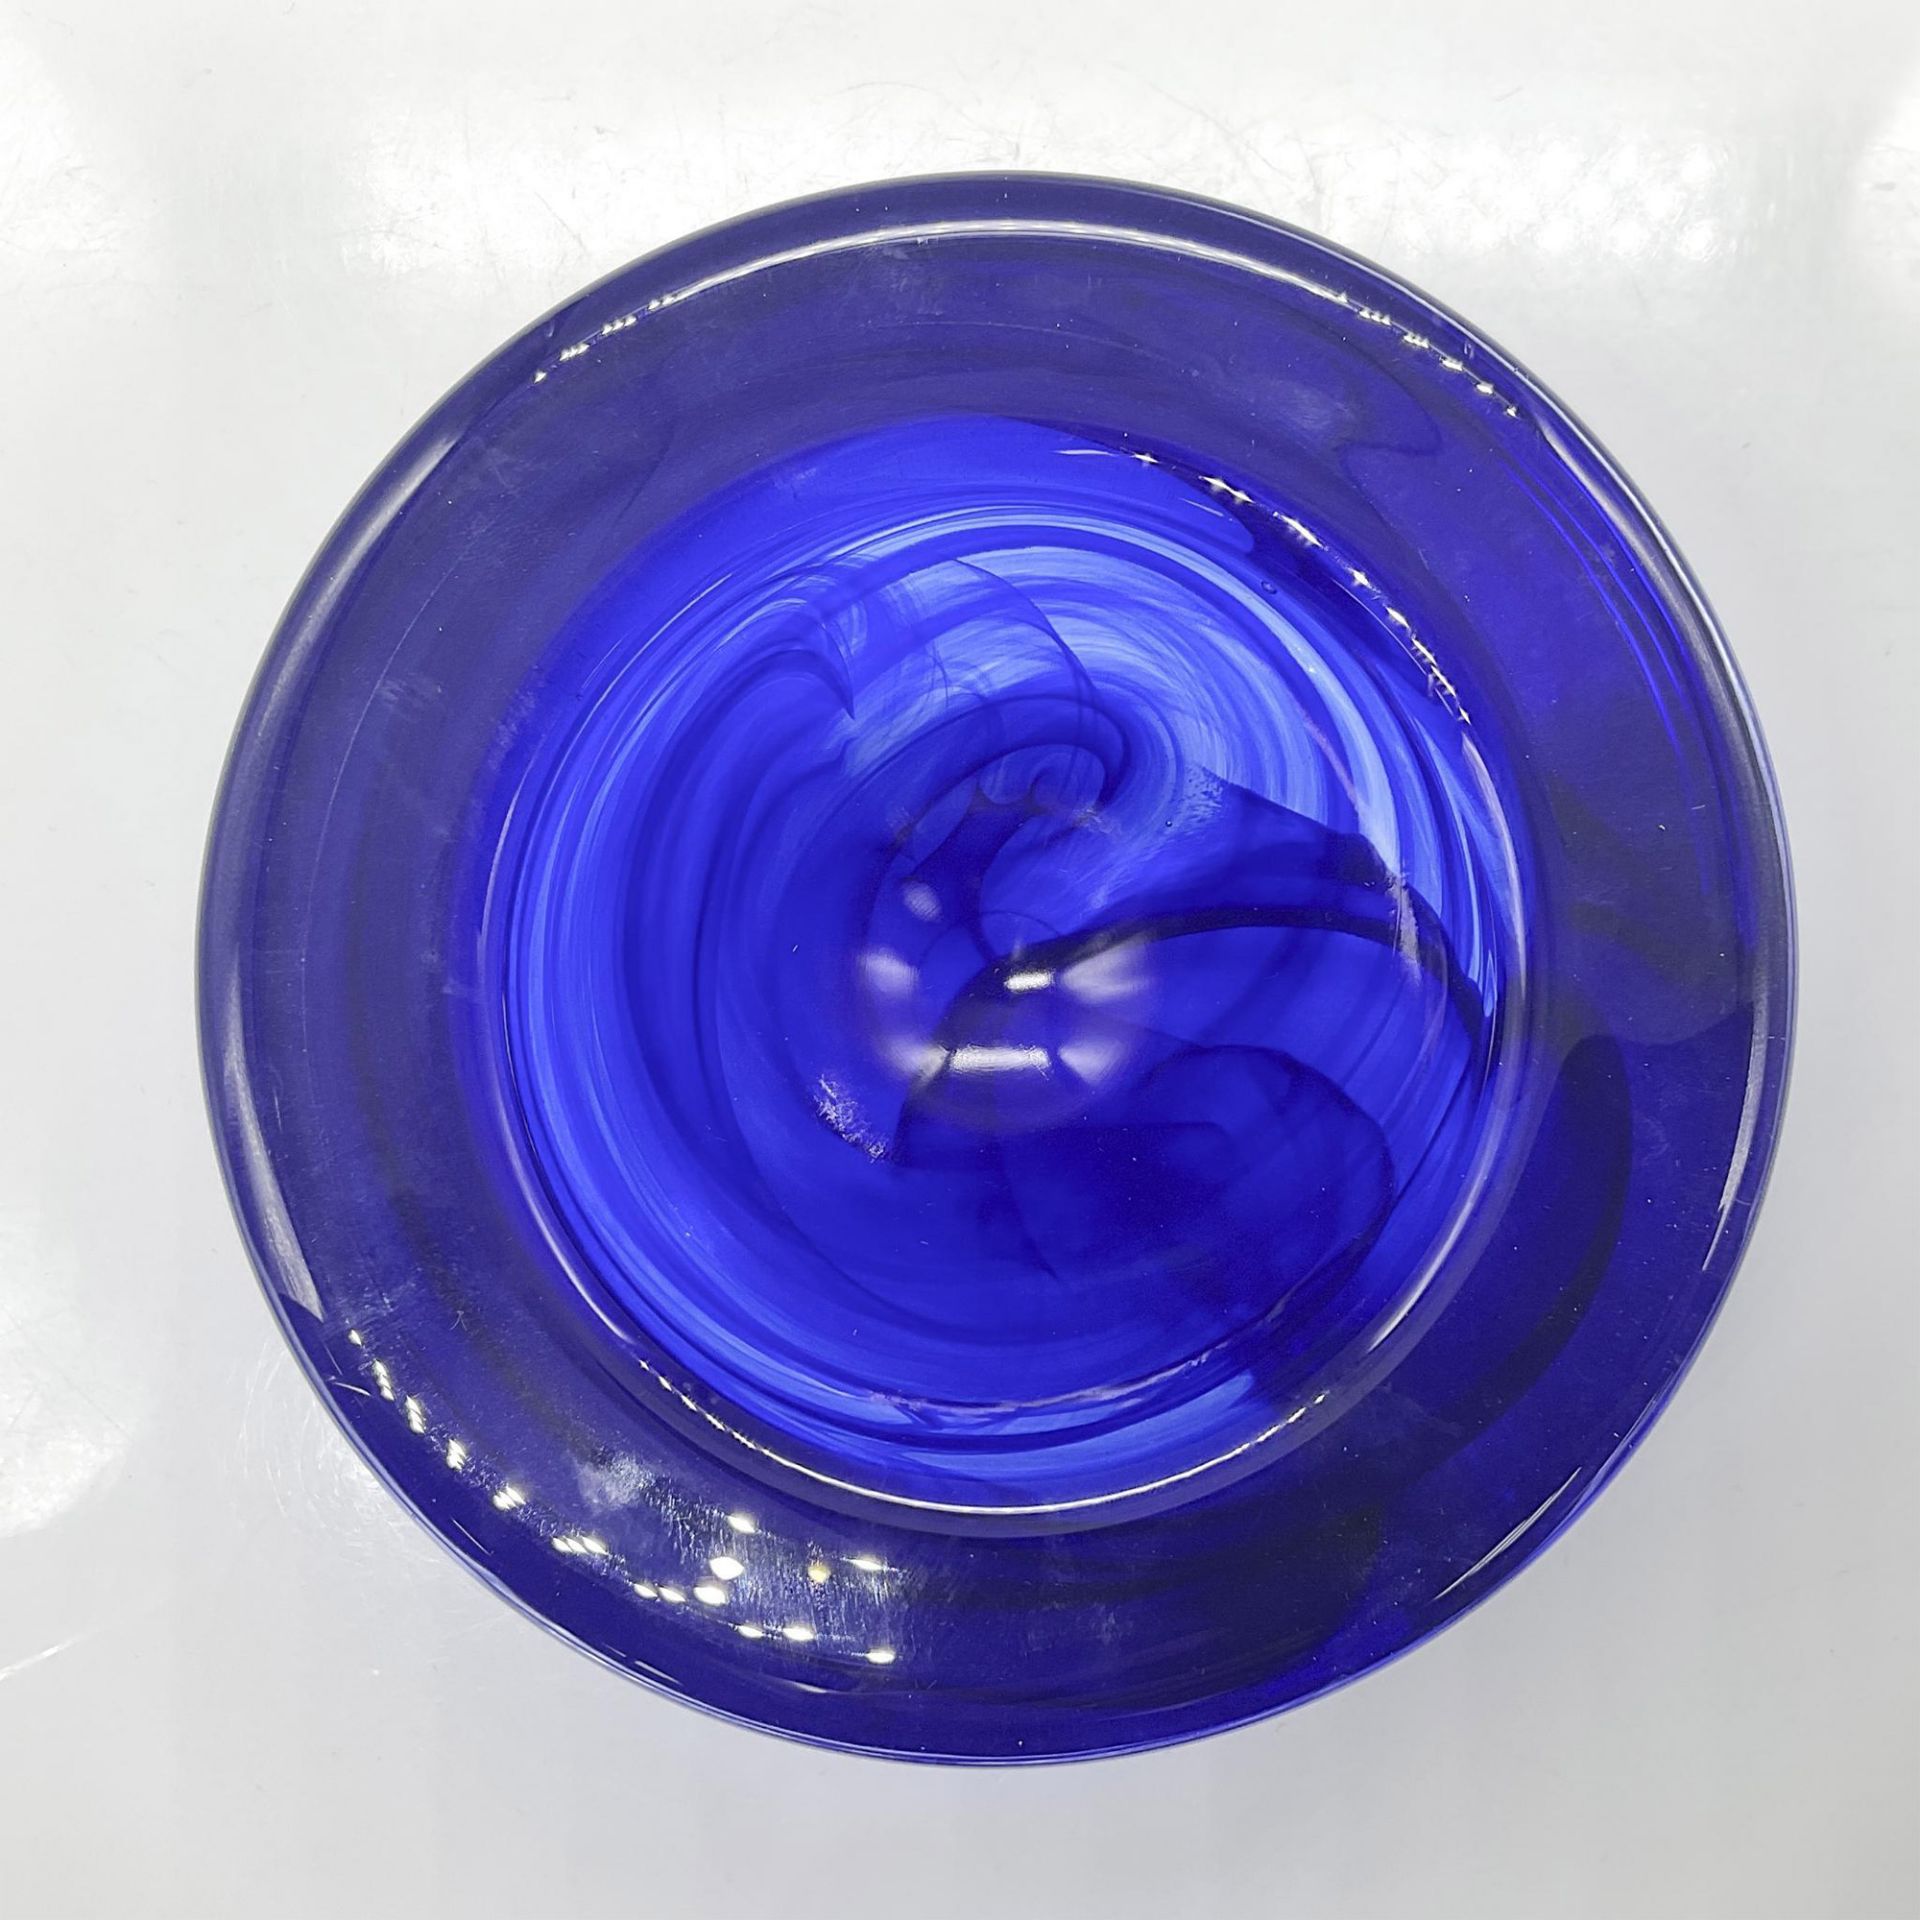 Kosta Boda Art Glass Blue Bowl - Image 2 of 3